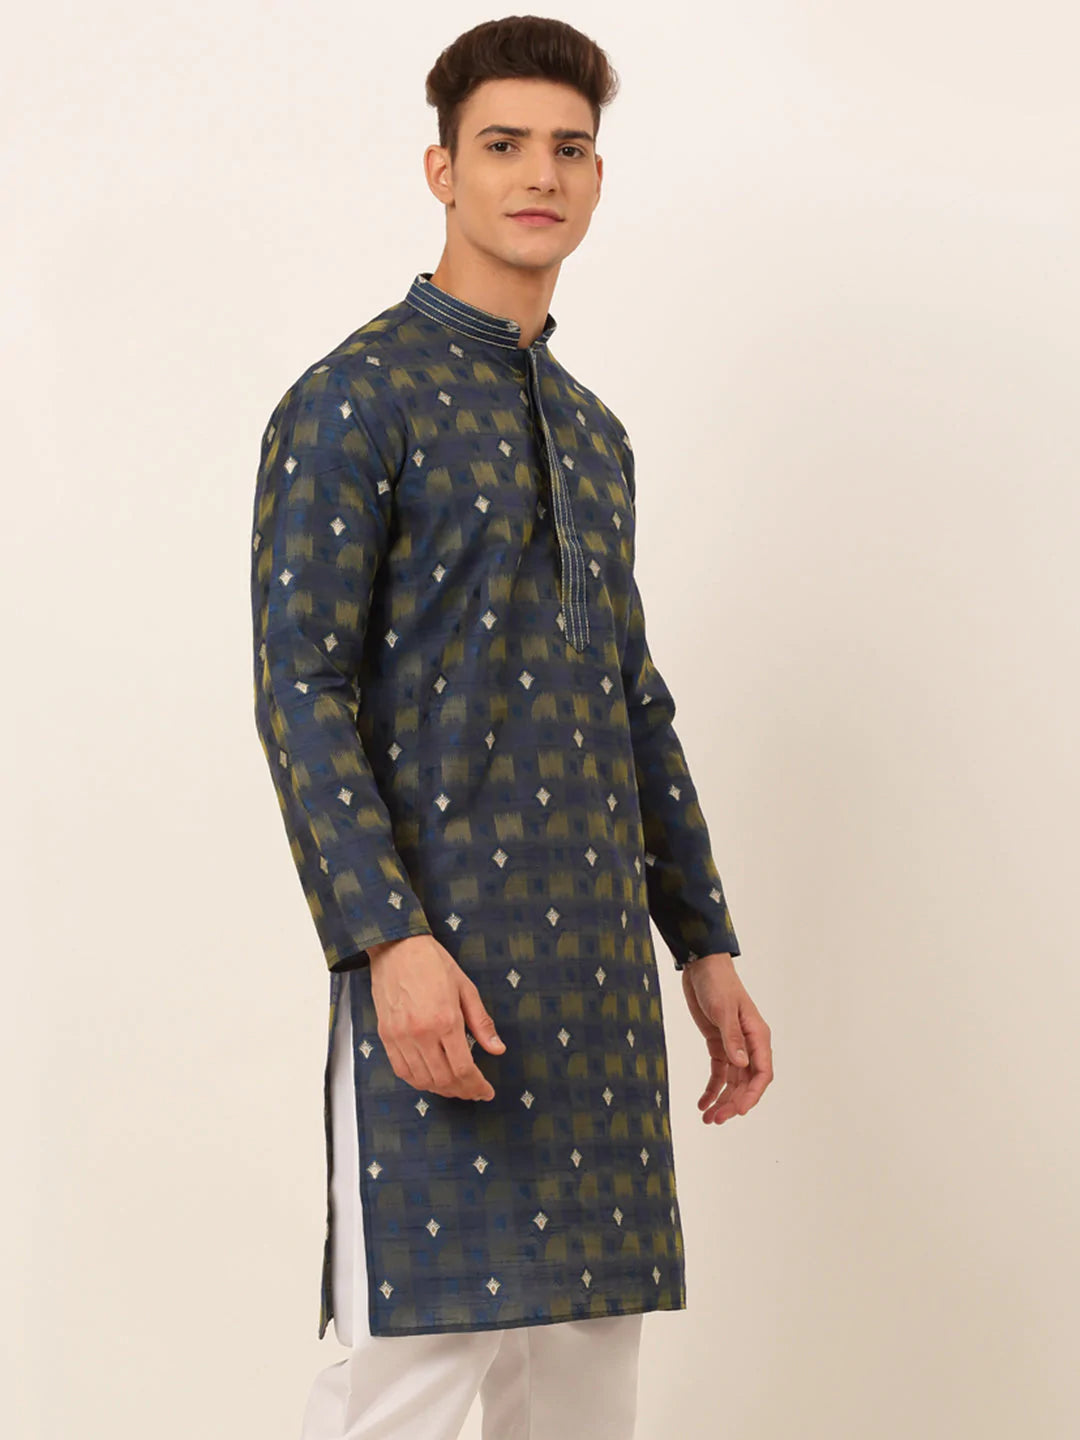 Jompers Men's Navy Blue Collar Embroidered Woven Design Kurta Pajama ( KO 672 Navy )